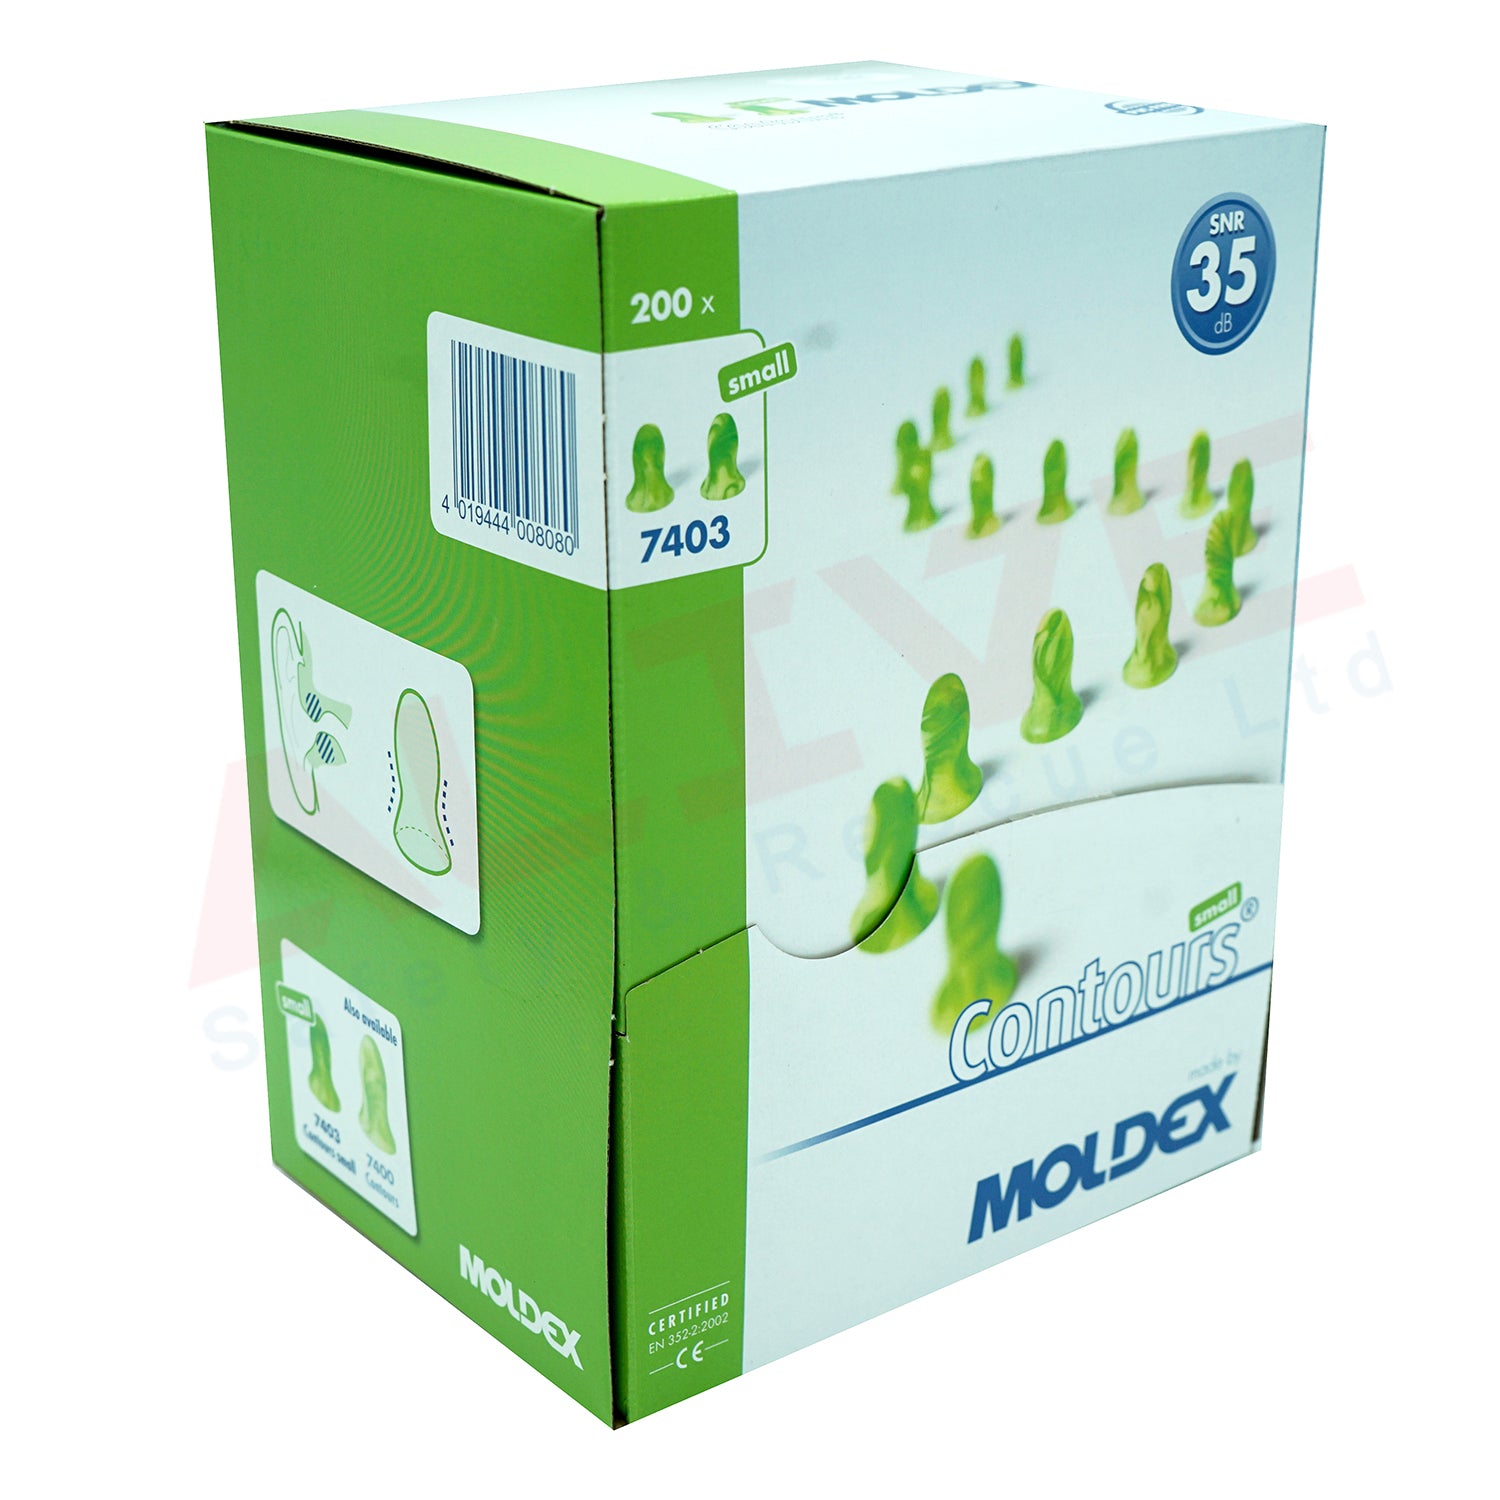 MOLDEX 7403 Contours Small Size Ear Plugs SNR 35dB box 1